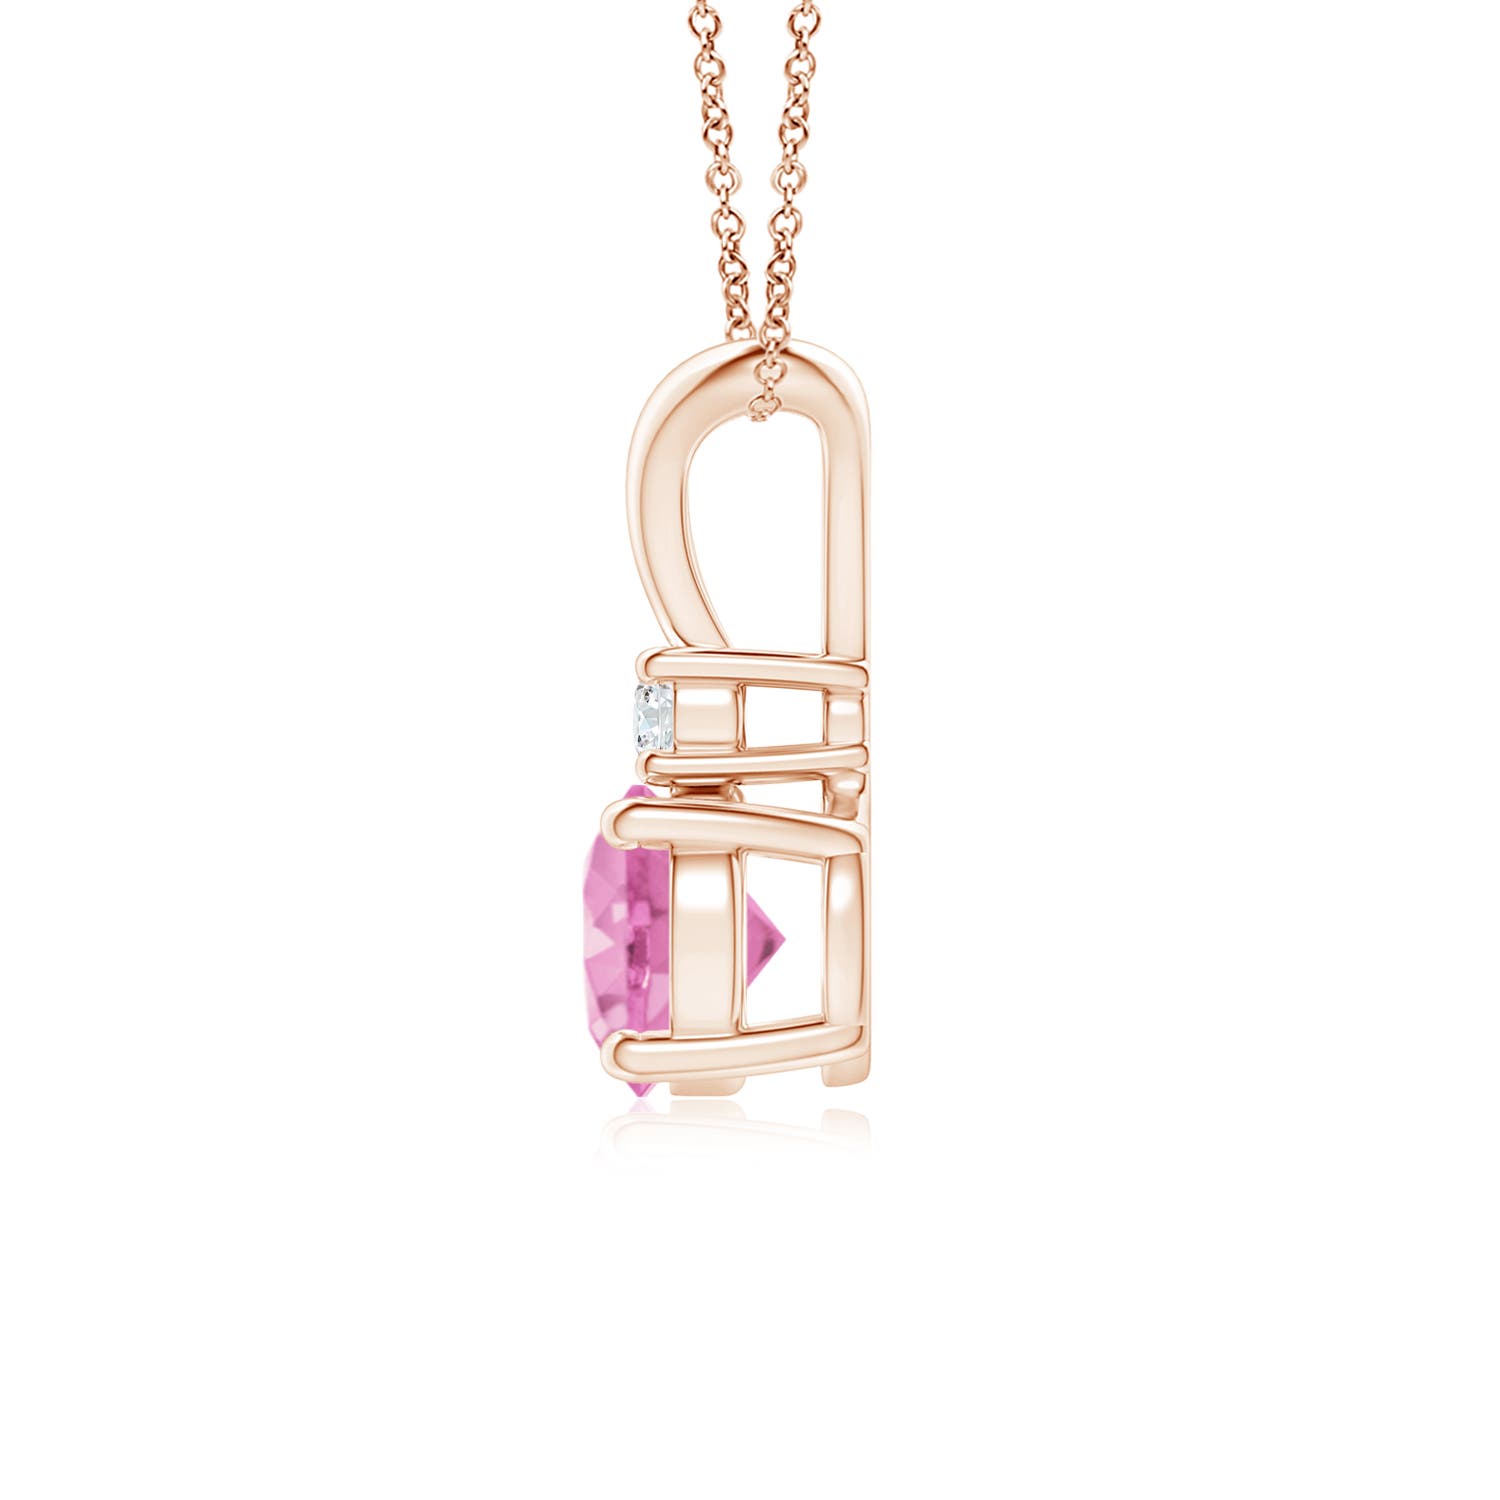 A - Pink Sapphire / 1.04 CT / 14 KT Rose Gold